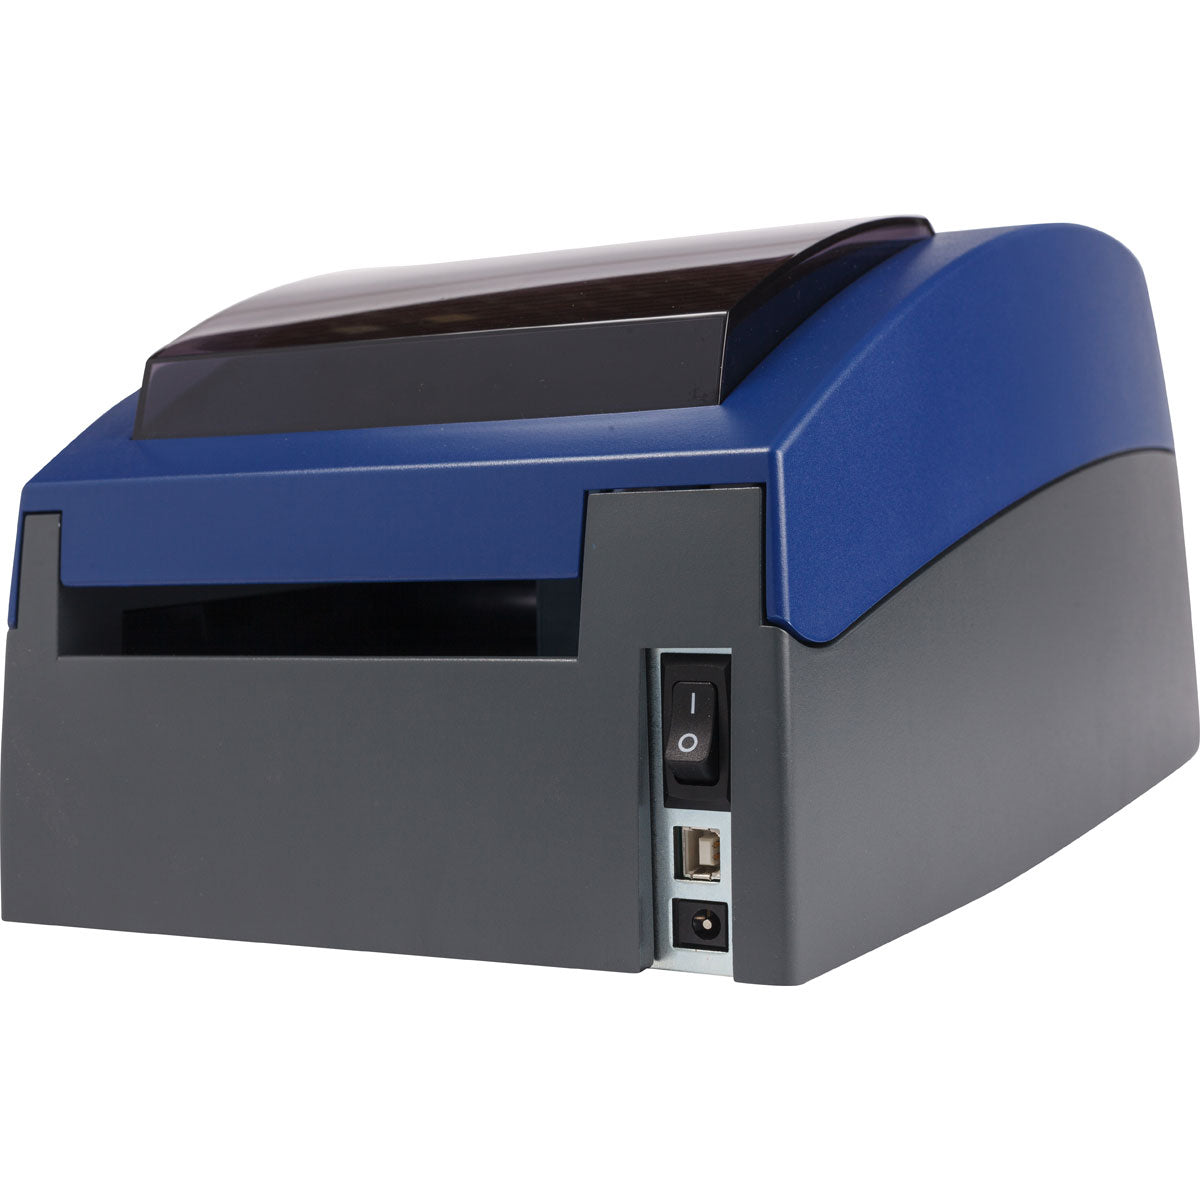 BradyJet J2000 Safety ID Label and Printer Kit - Up to 15% Savings Versus Purchased Separately